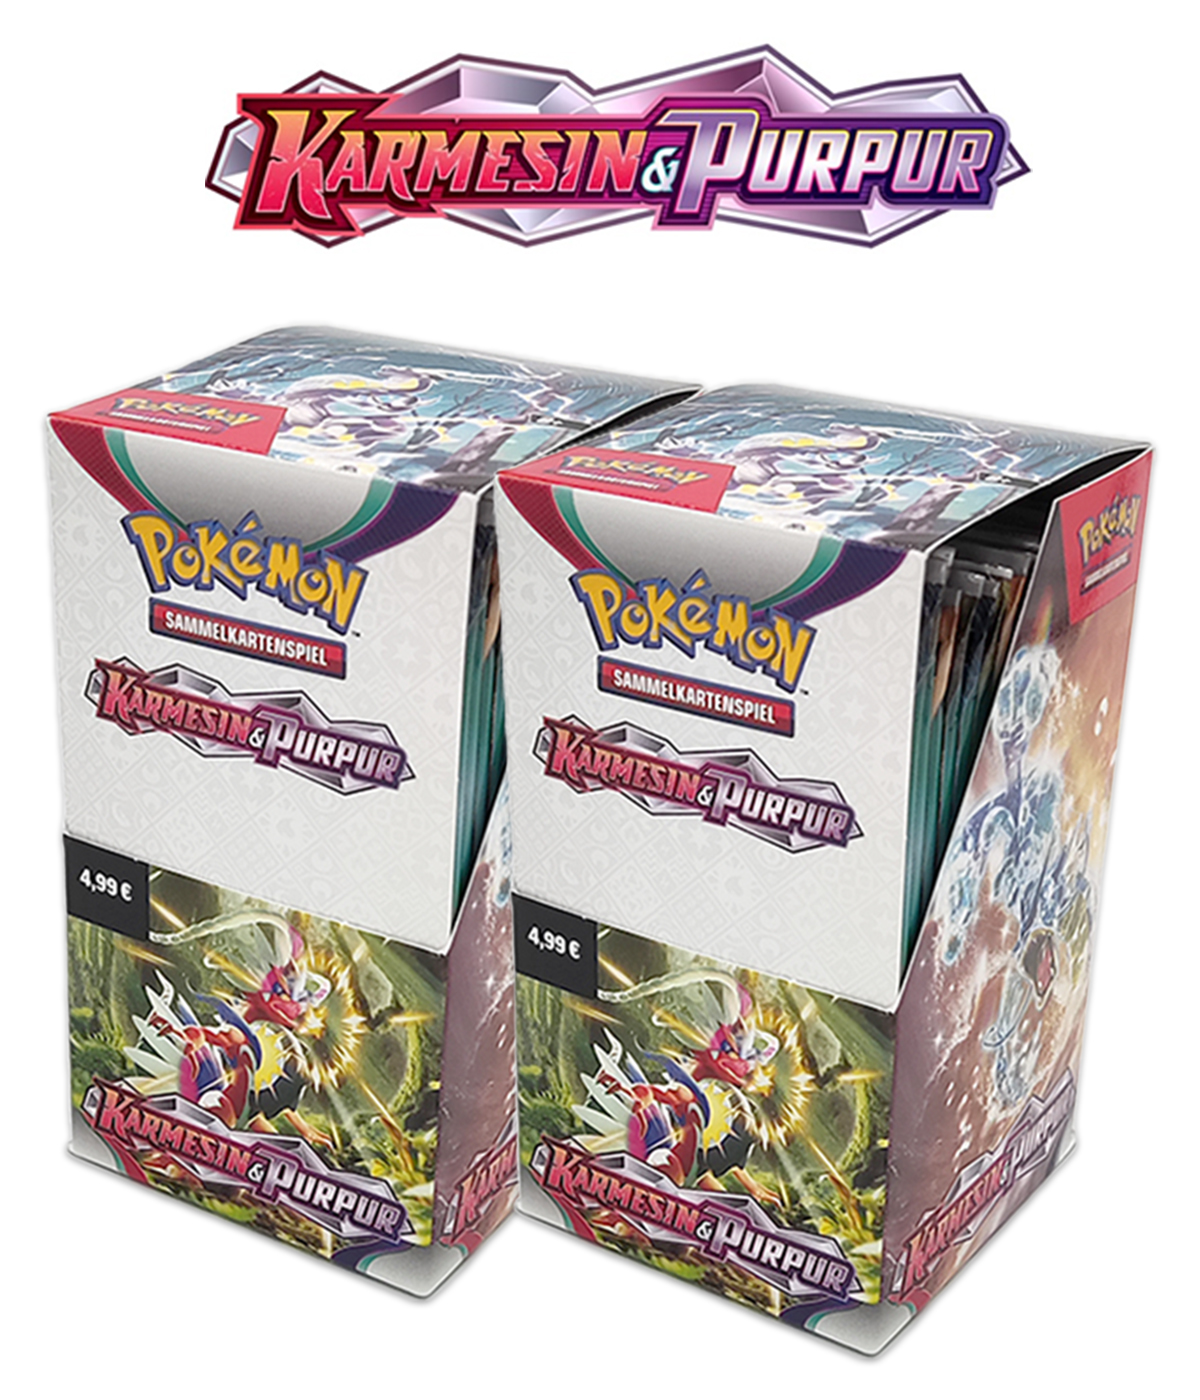 Pokémon Double Bundle "Karmesin & Purpur" - 2 Displays mit je 18 Boosterpacks